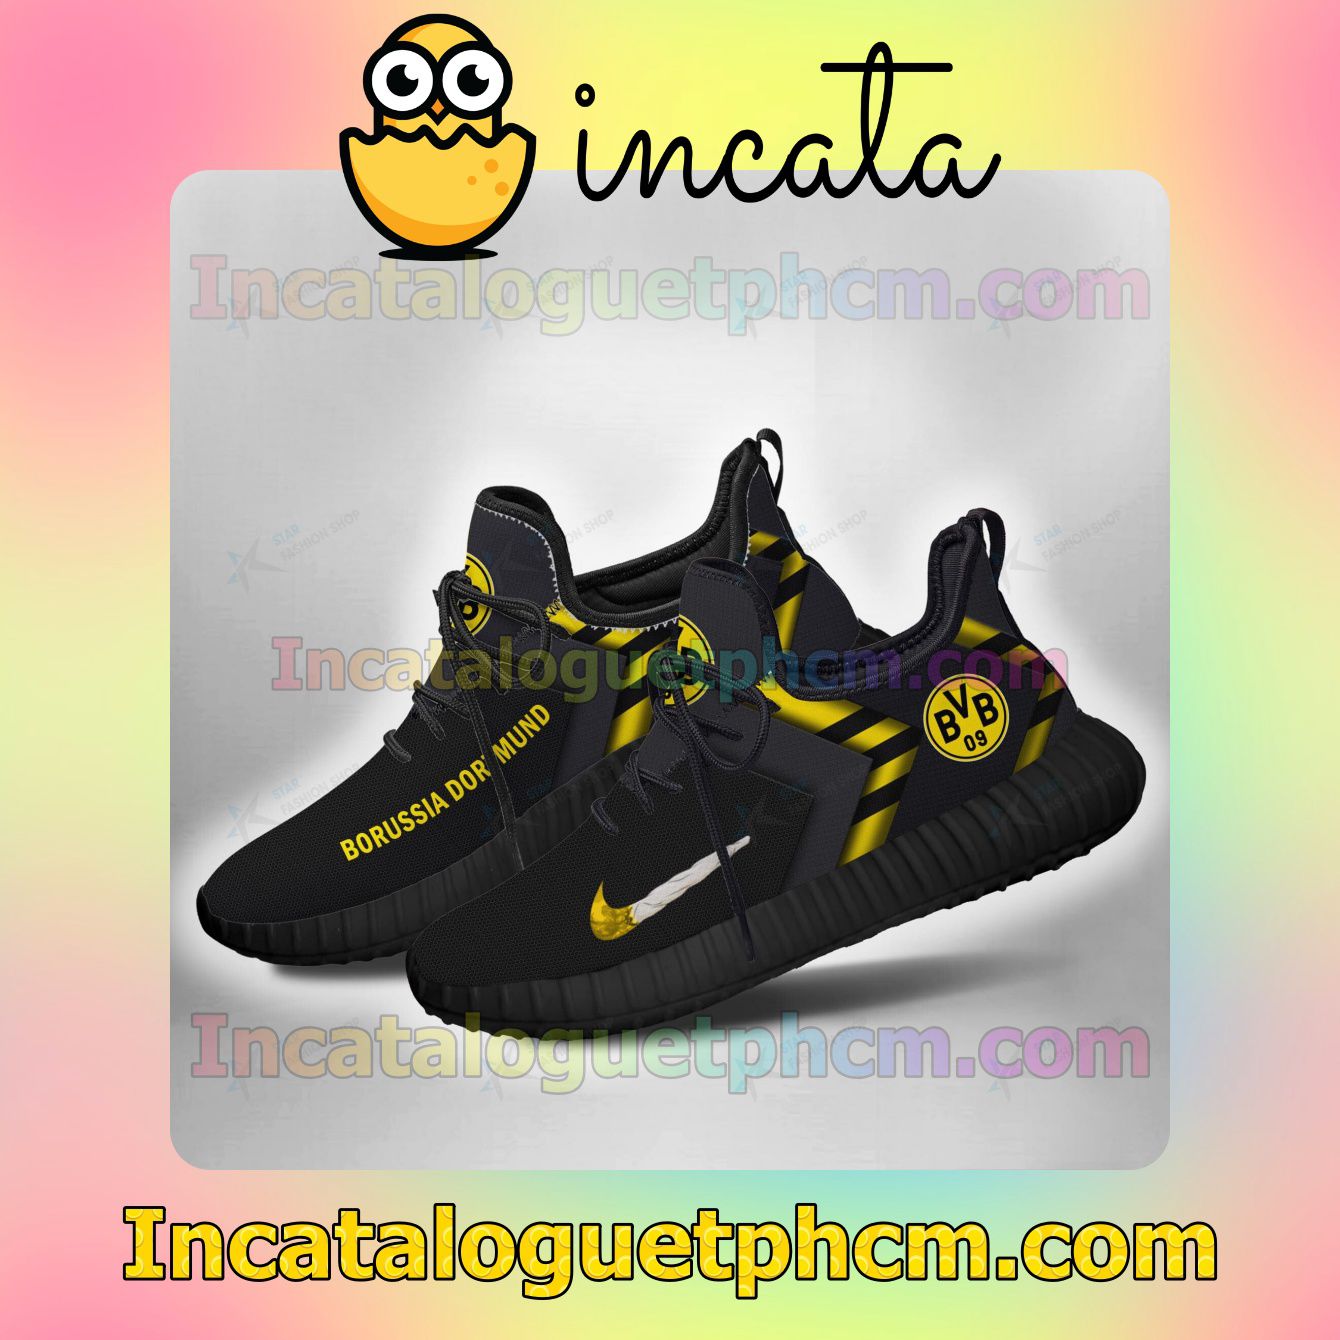 Beautiful Borussia Dortmund II Ultraboost Yeezy Shoes Sneakers